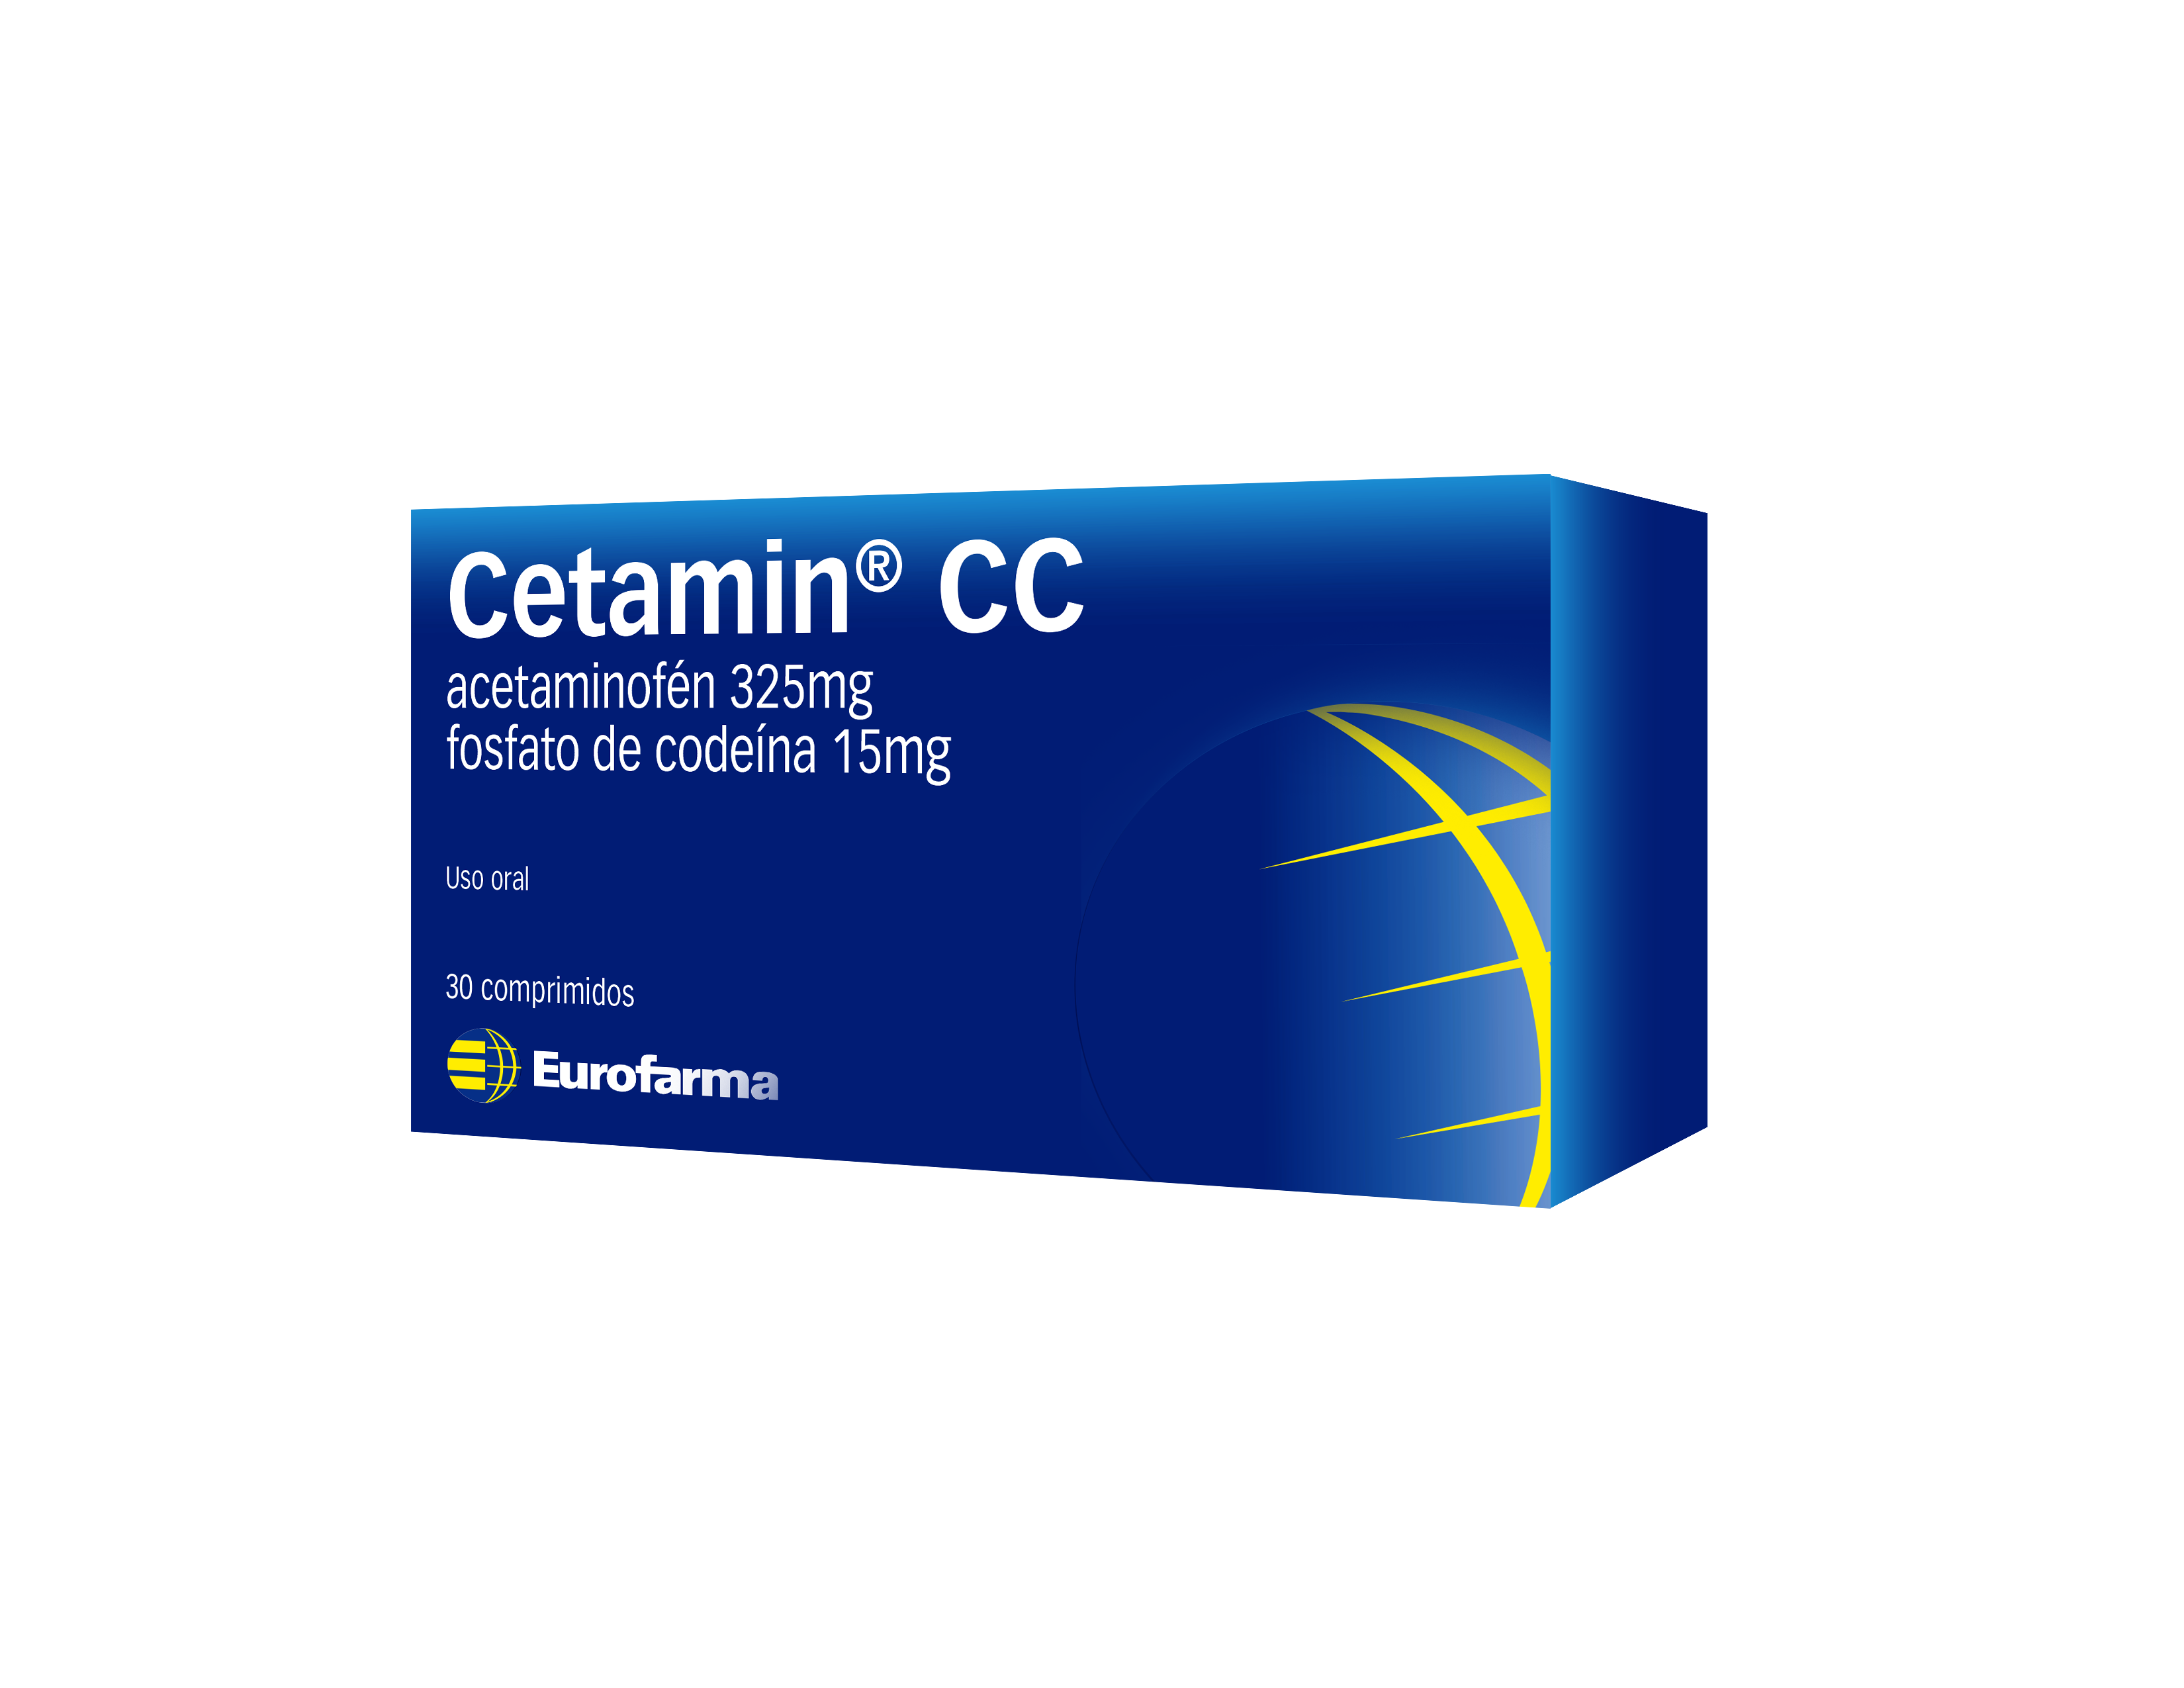 Cetamin CC - 30 comprimidos